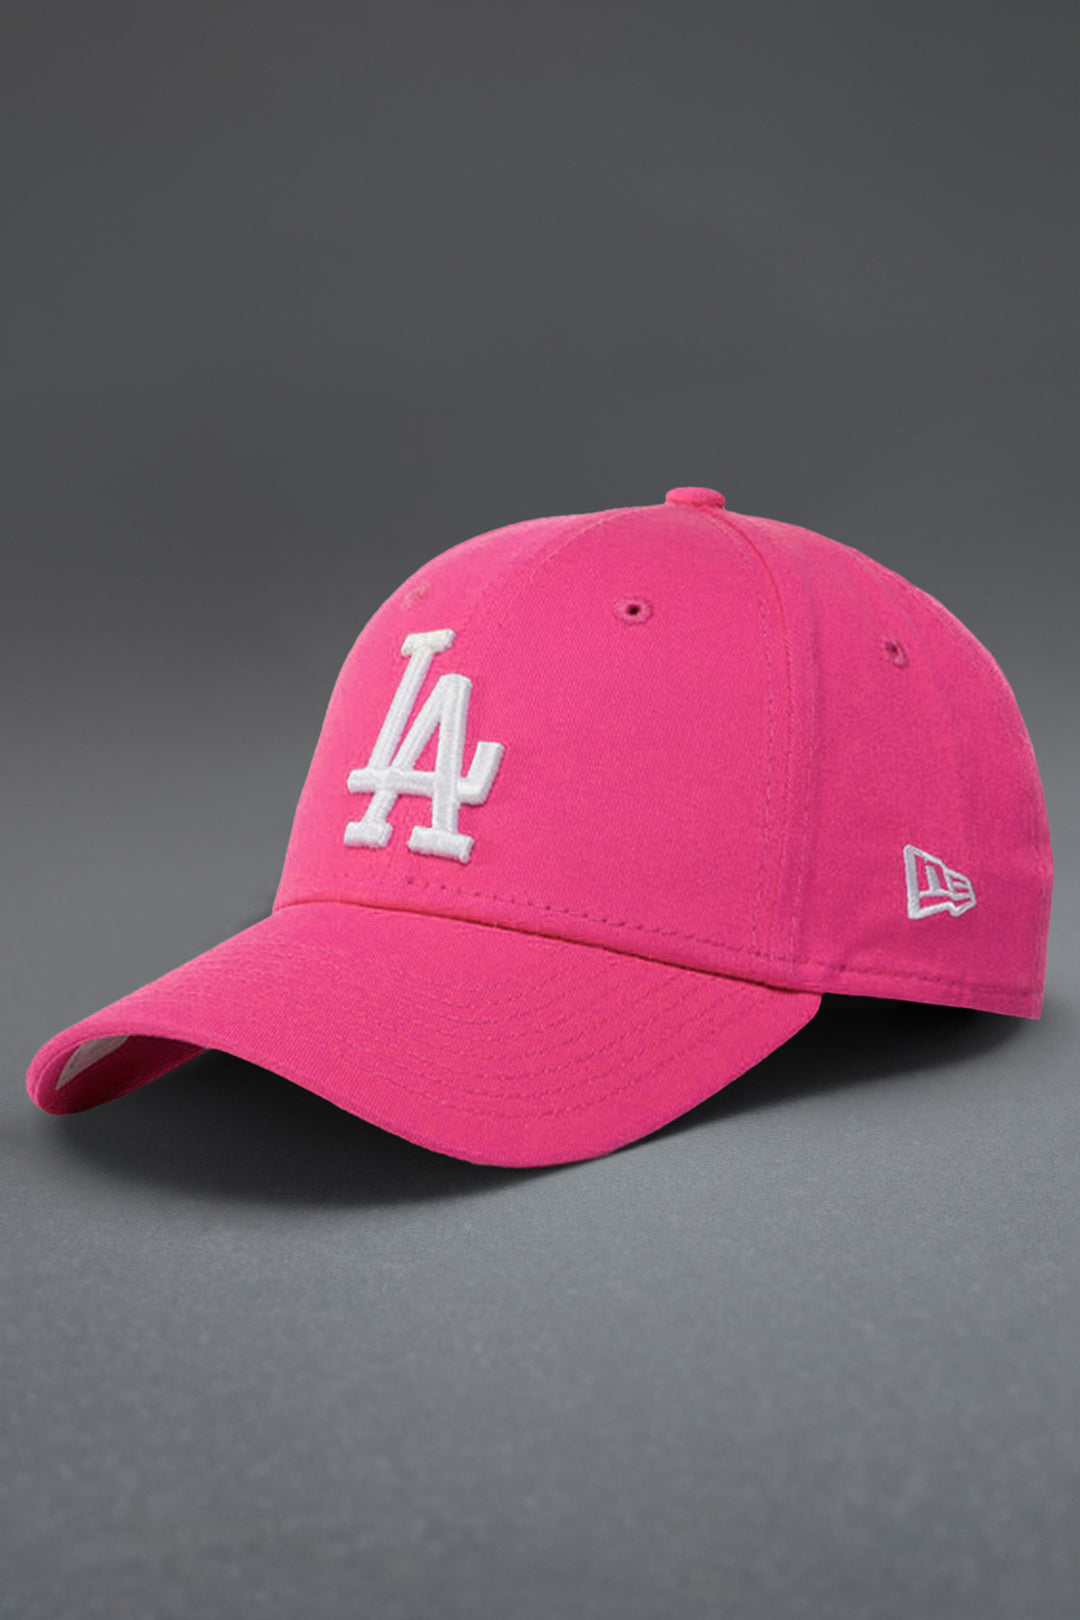 Pink LA Embroidered Cap - S23 - MCP116R